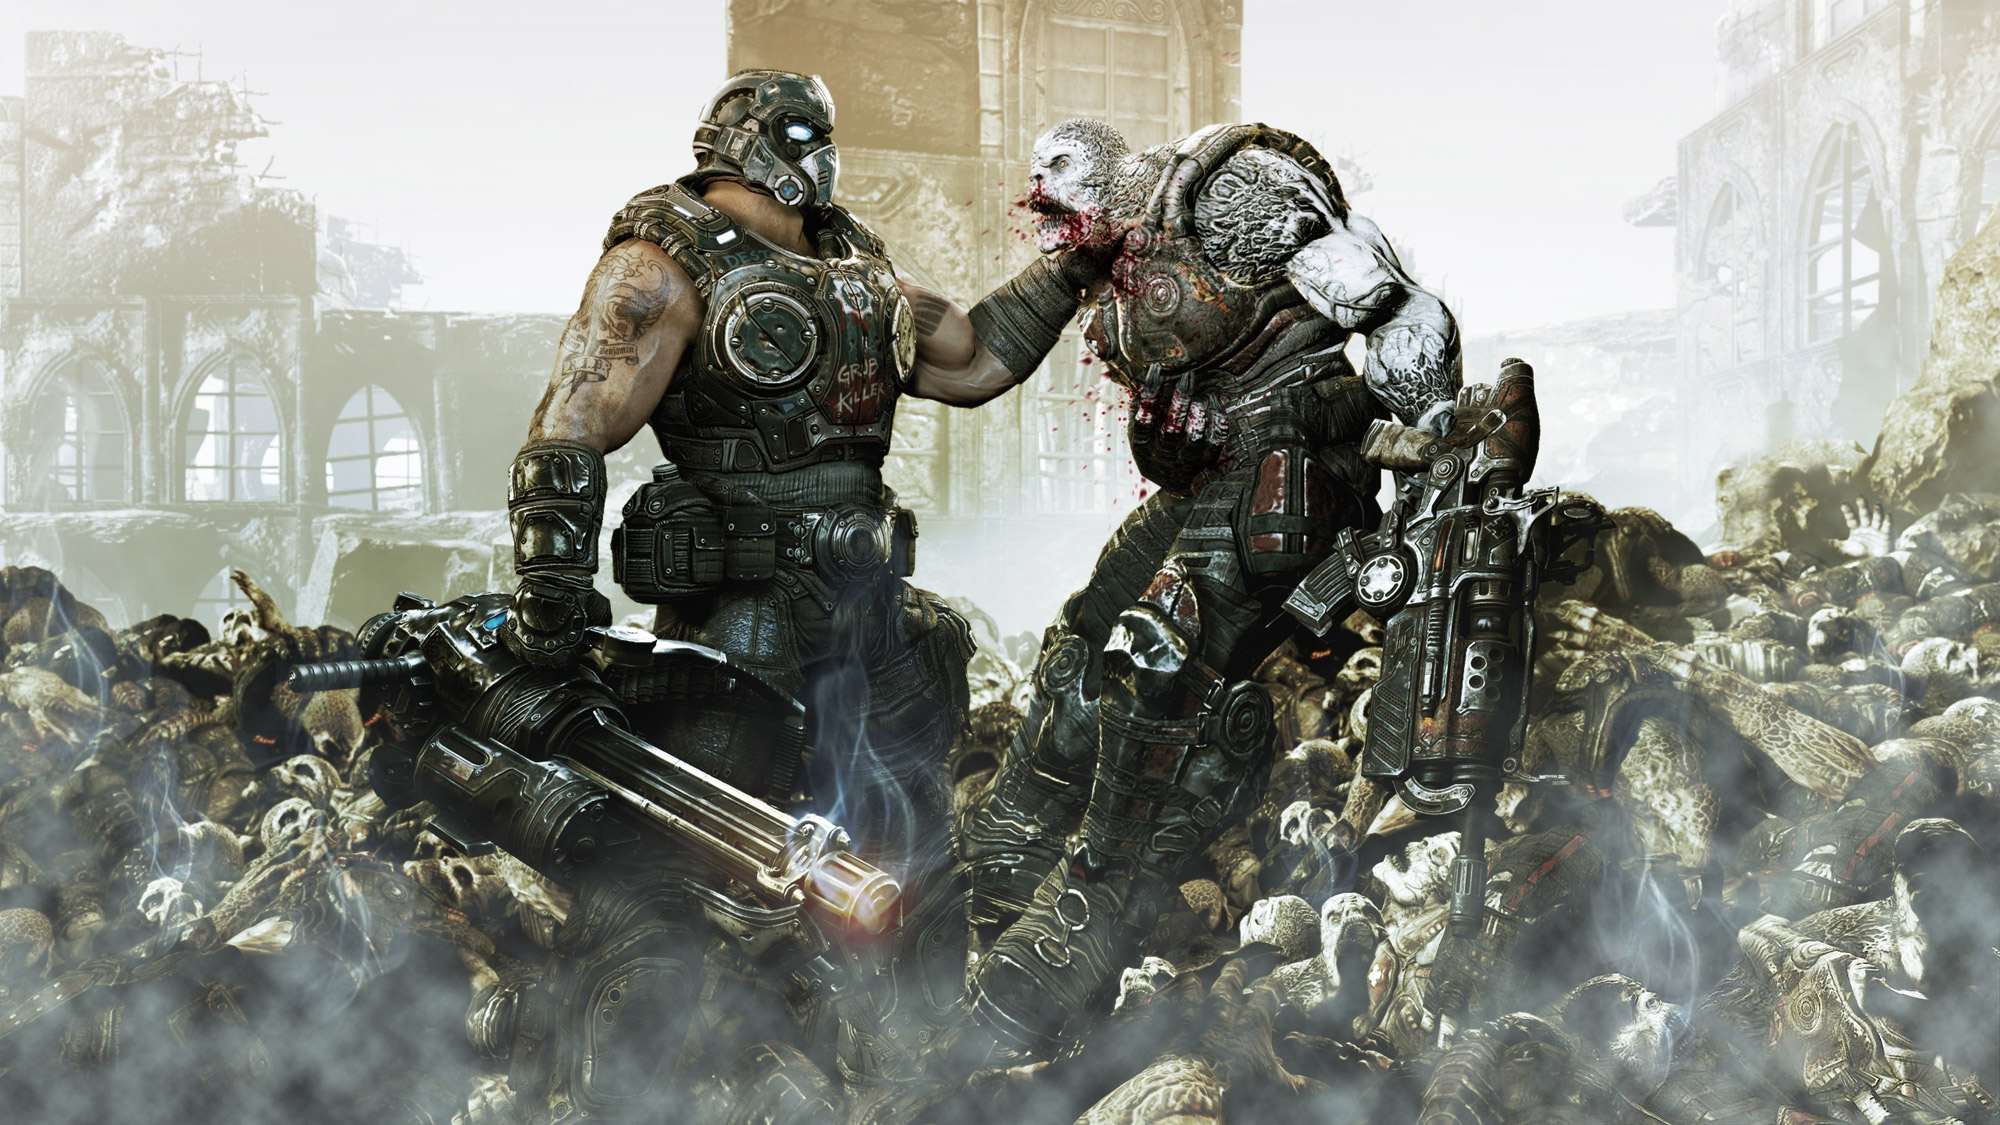 Gears Of War 3 Backgrounds on Wallpapers Vista